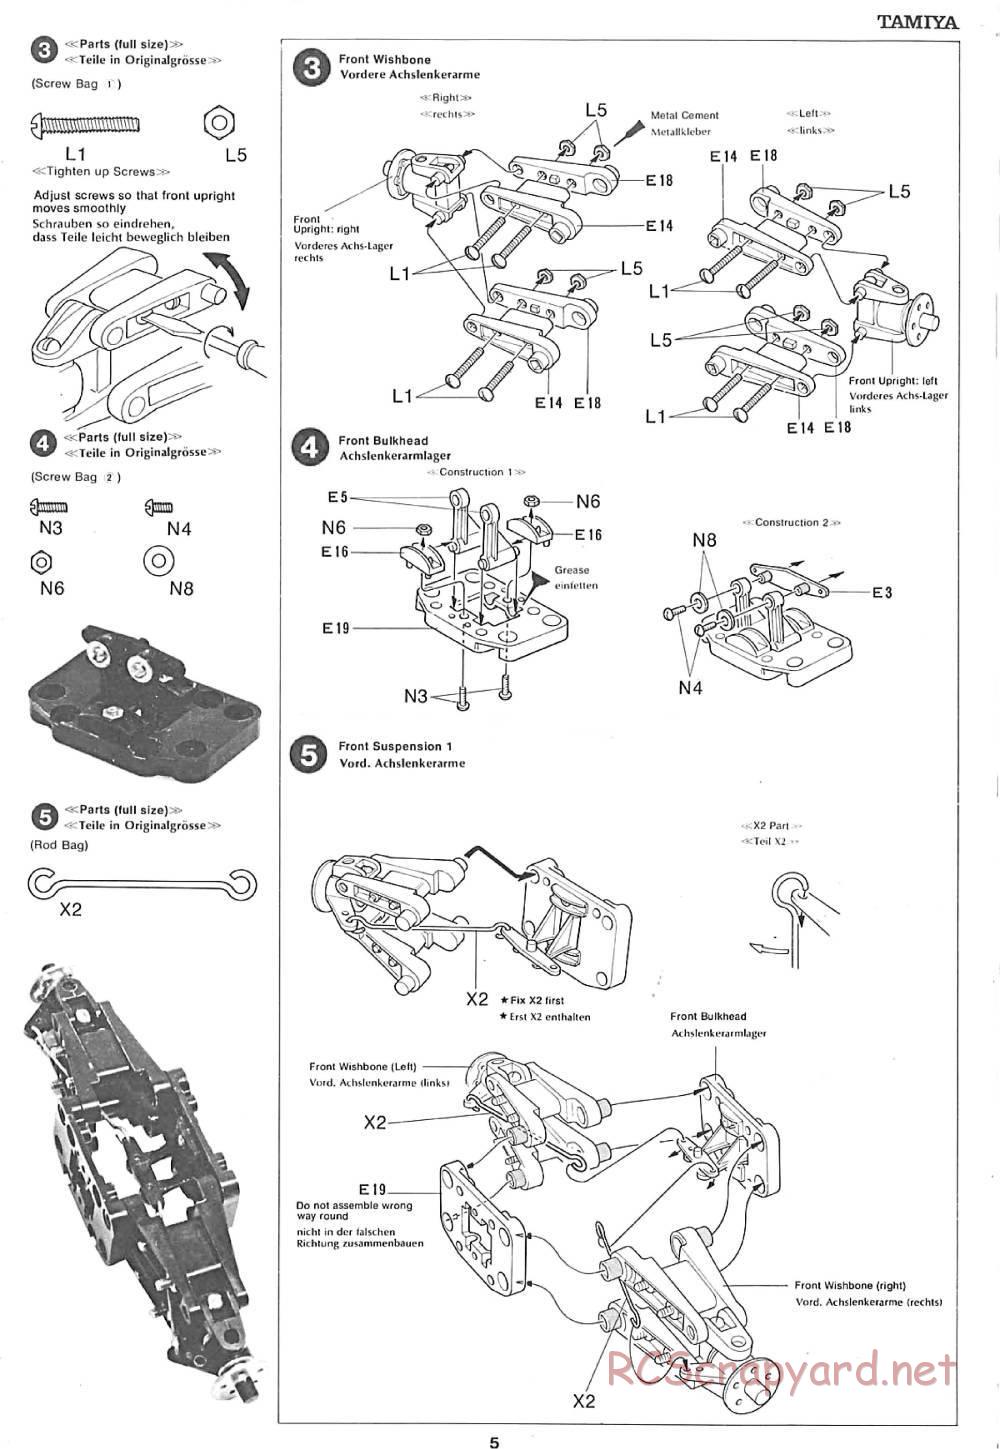 Tamiya - Lamborghini Cheetah - 58007 - Manual - Page 5